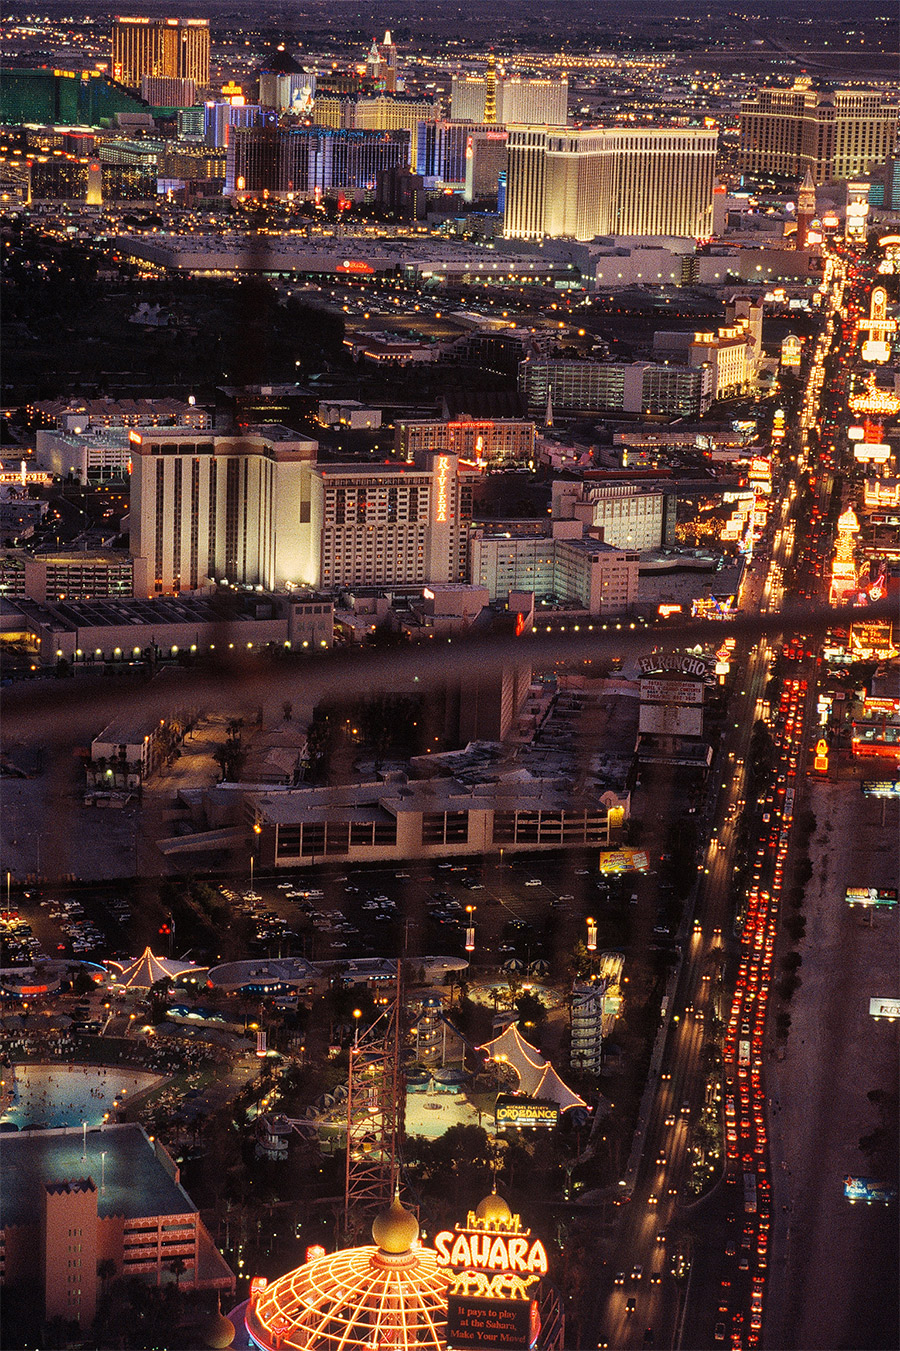 The strip at night, Las Vegas, Rene Burri, 2000.